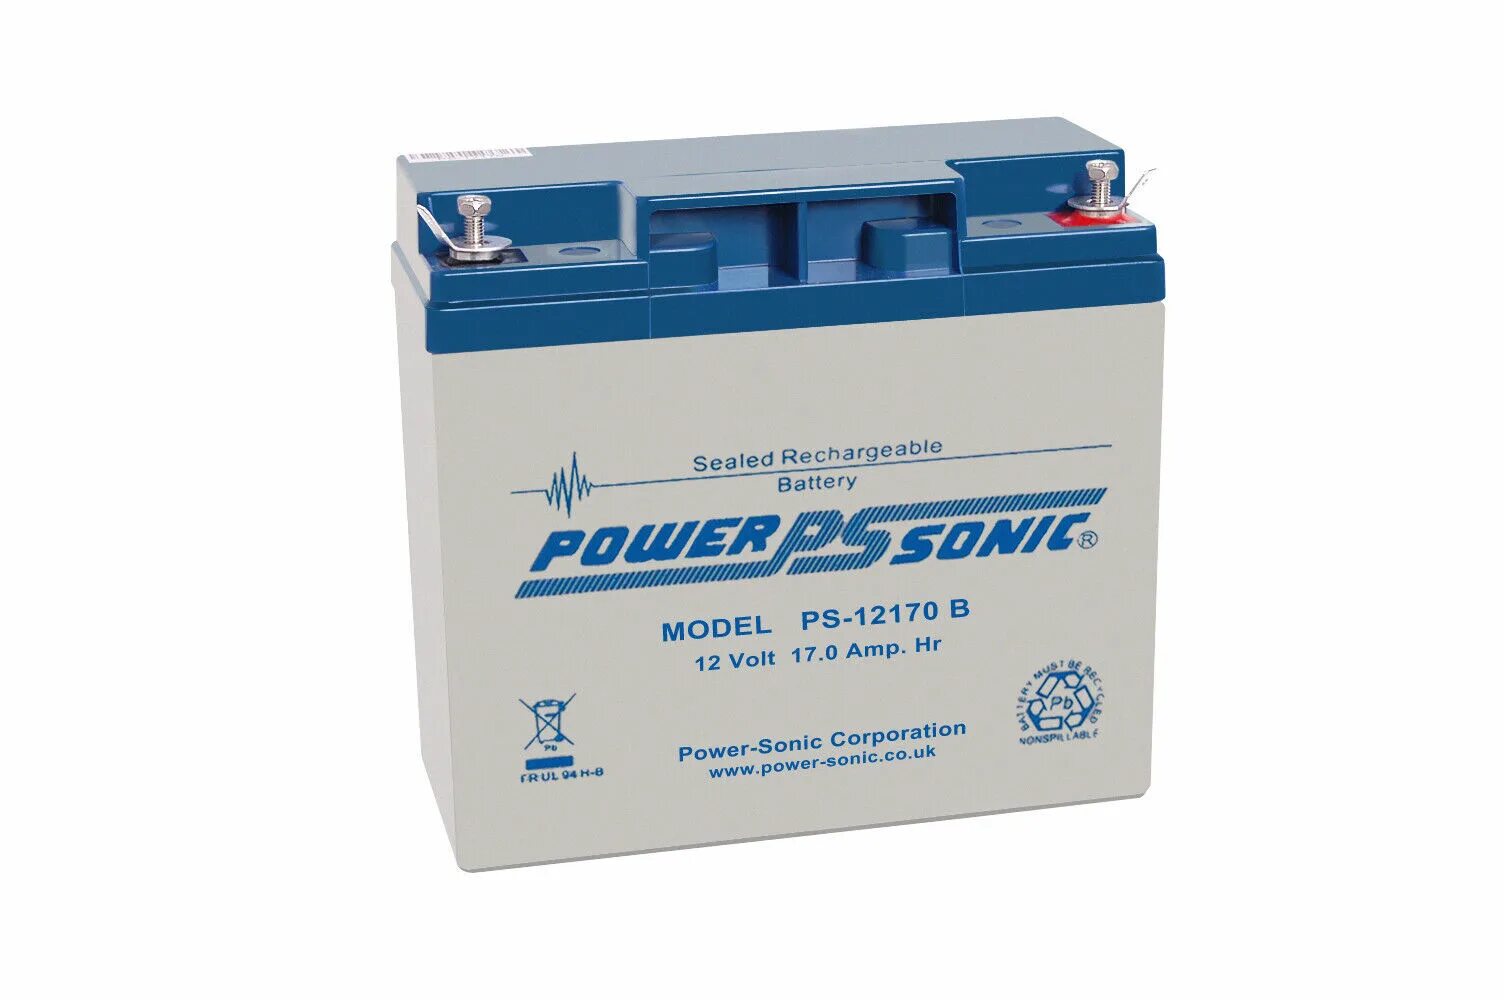 12 v battery. Аккумулятор Daewoo SP Battery 12v 9ah. Аккумулятор Power Sonic PS-1212 12v, 1.4. Lead acid 12 v 5ah аккумулятор. Daewoo SP Battery аккумулятор 12v 32ah t6.